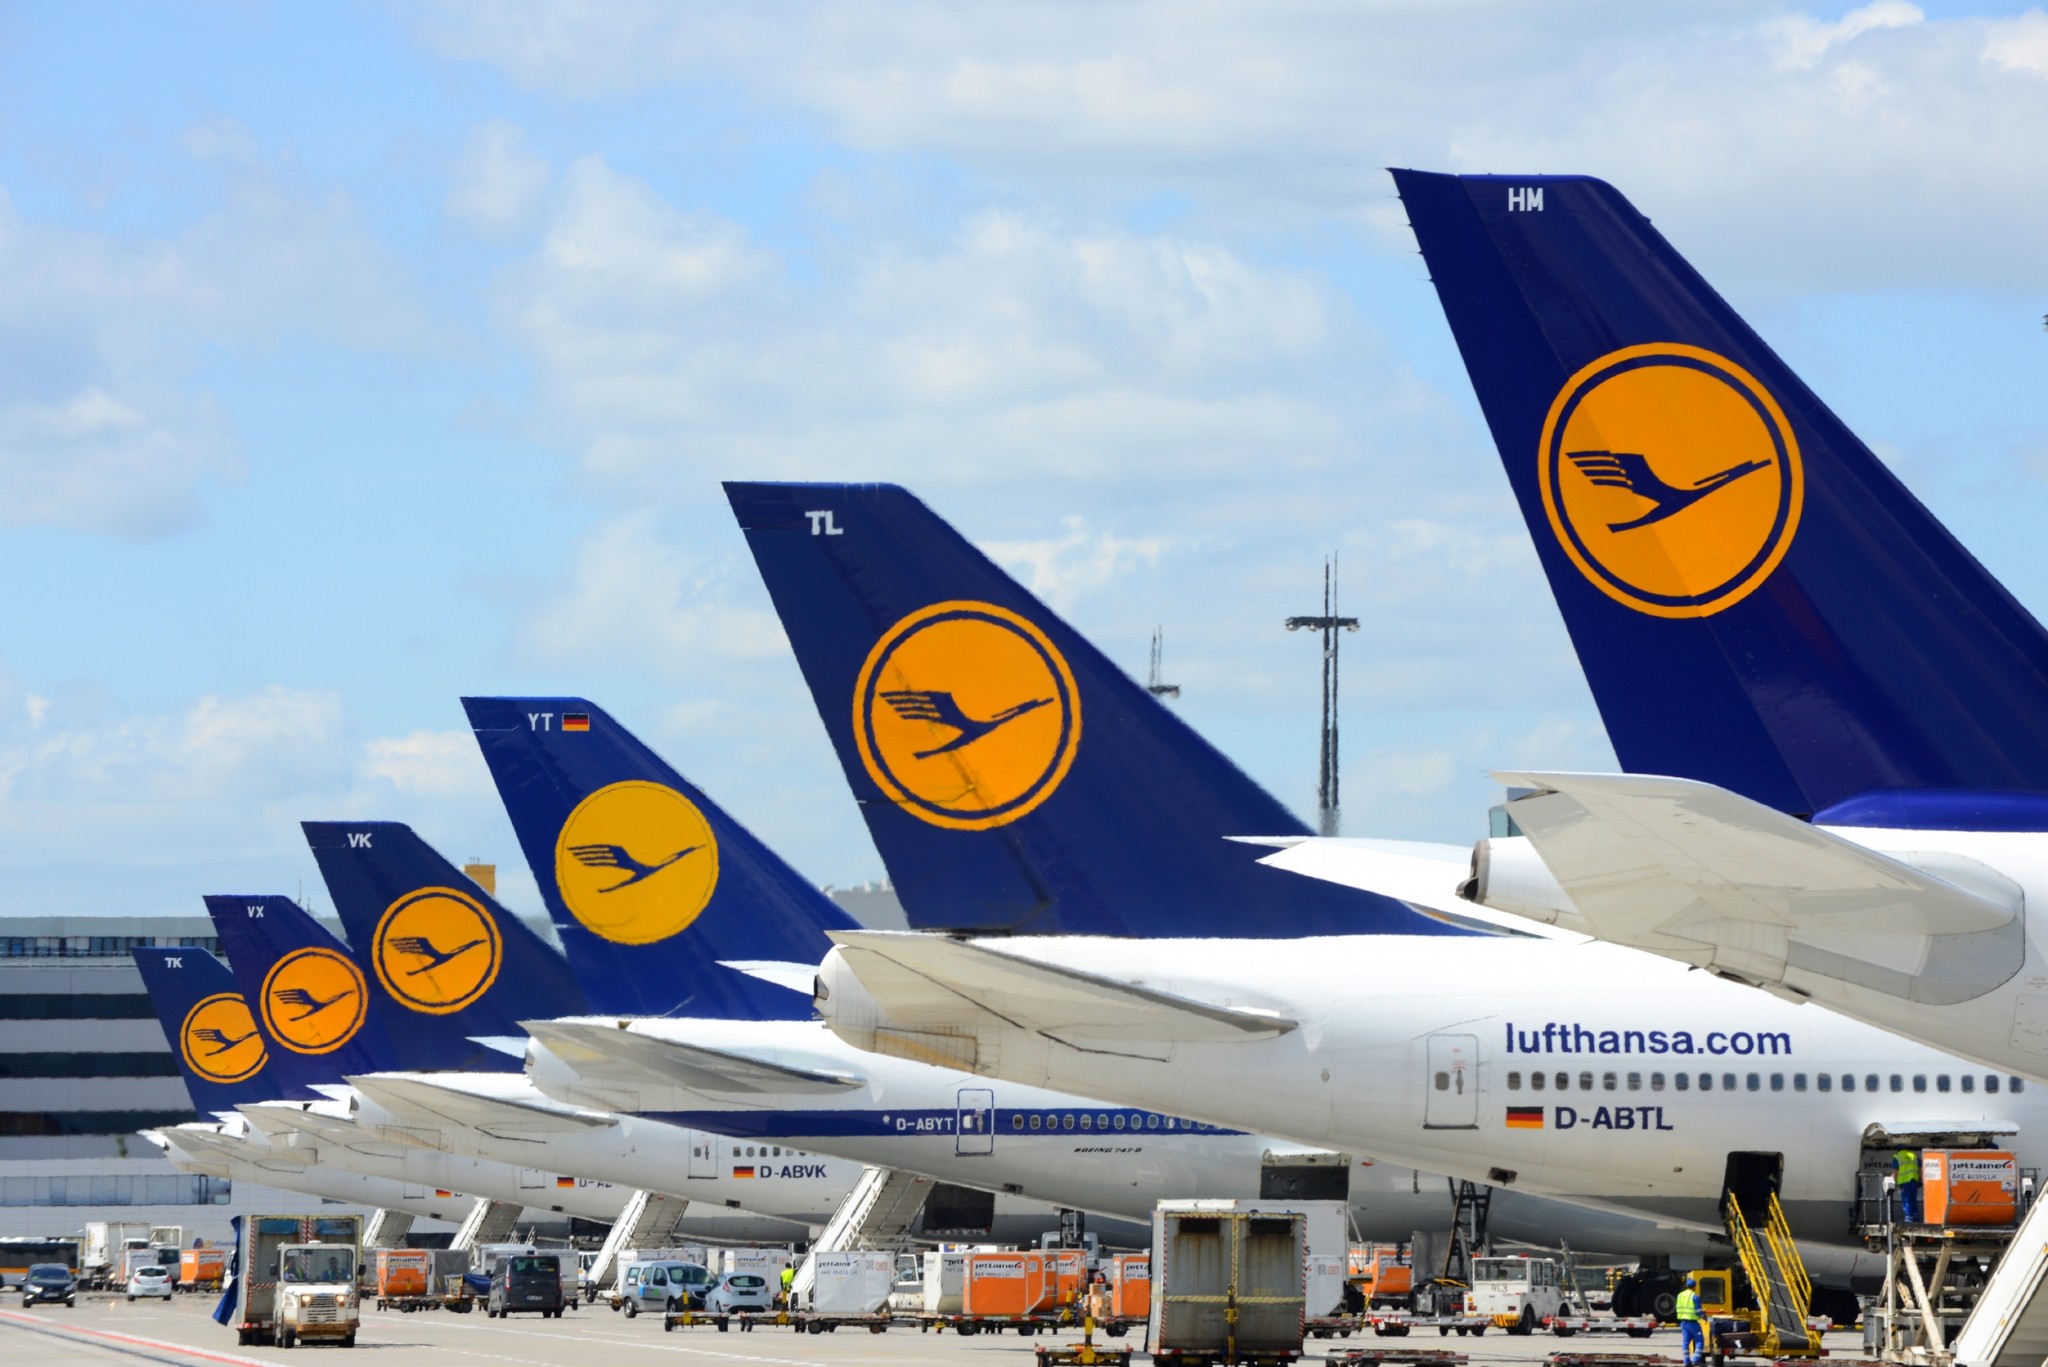 Lufthansa CEO becomes 78th chairman of IATA